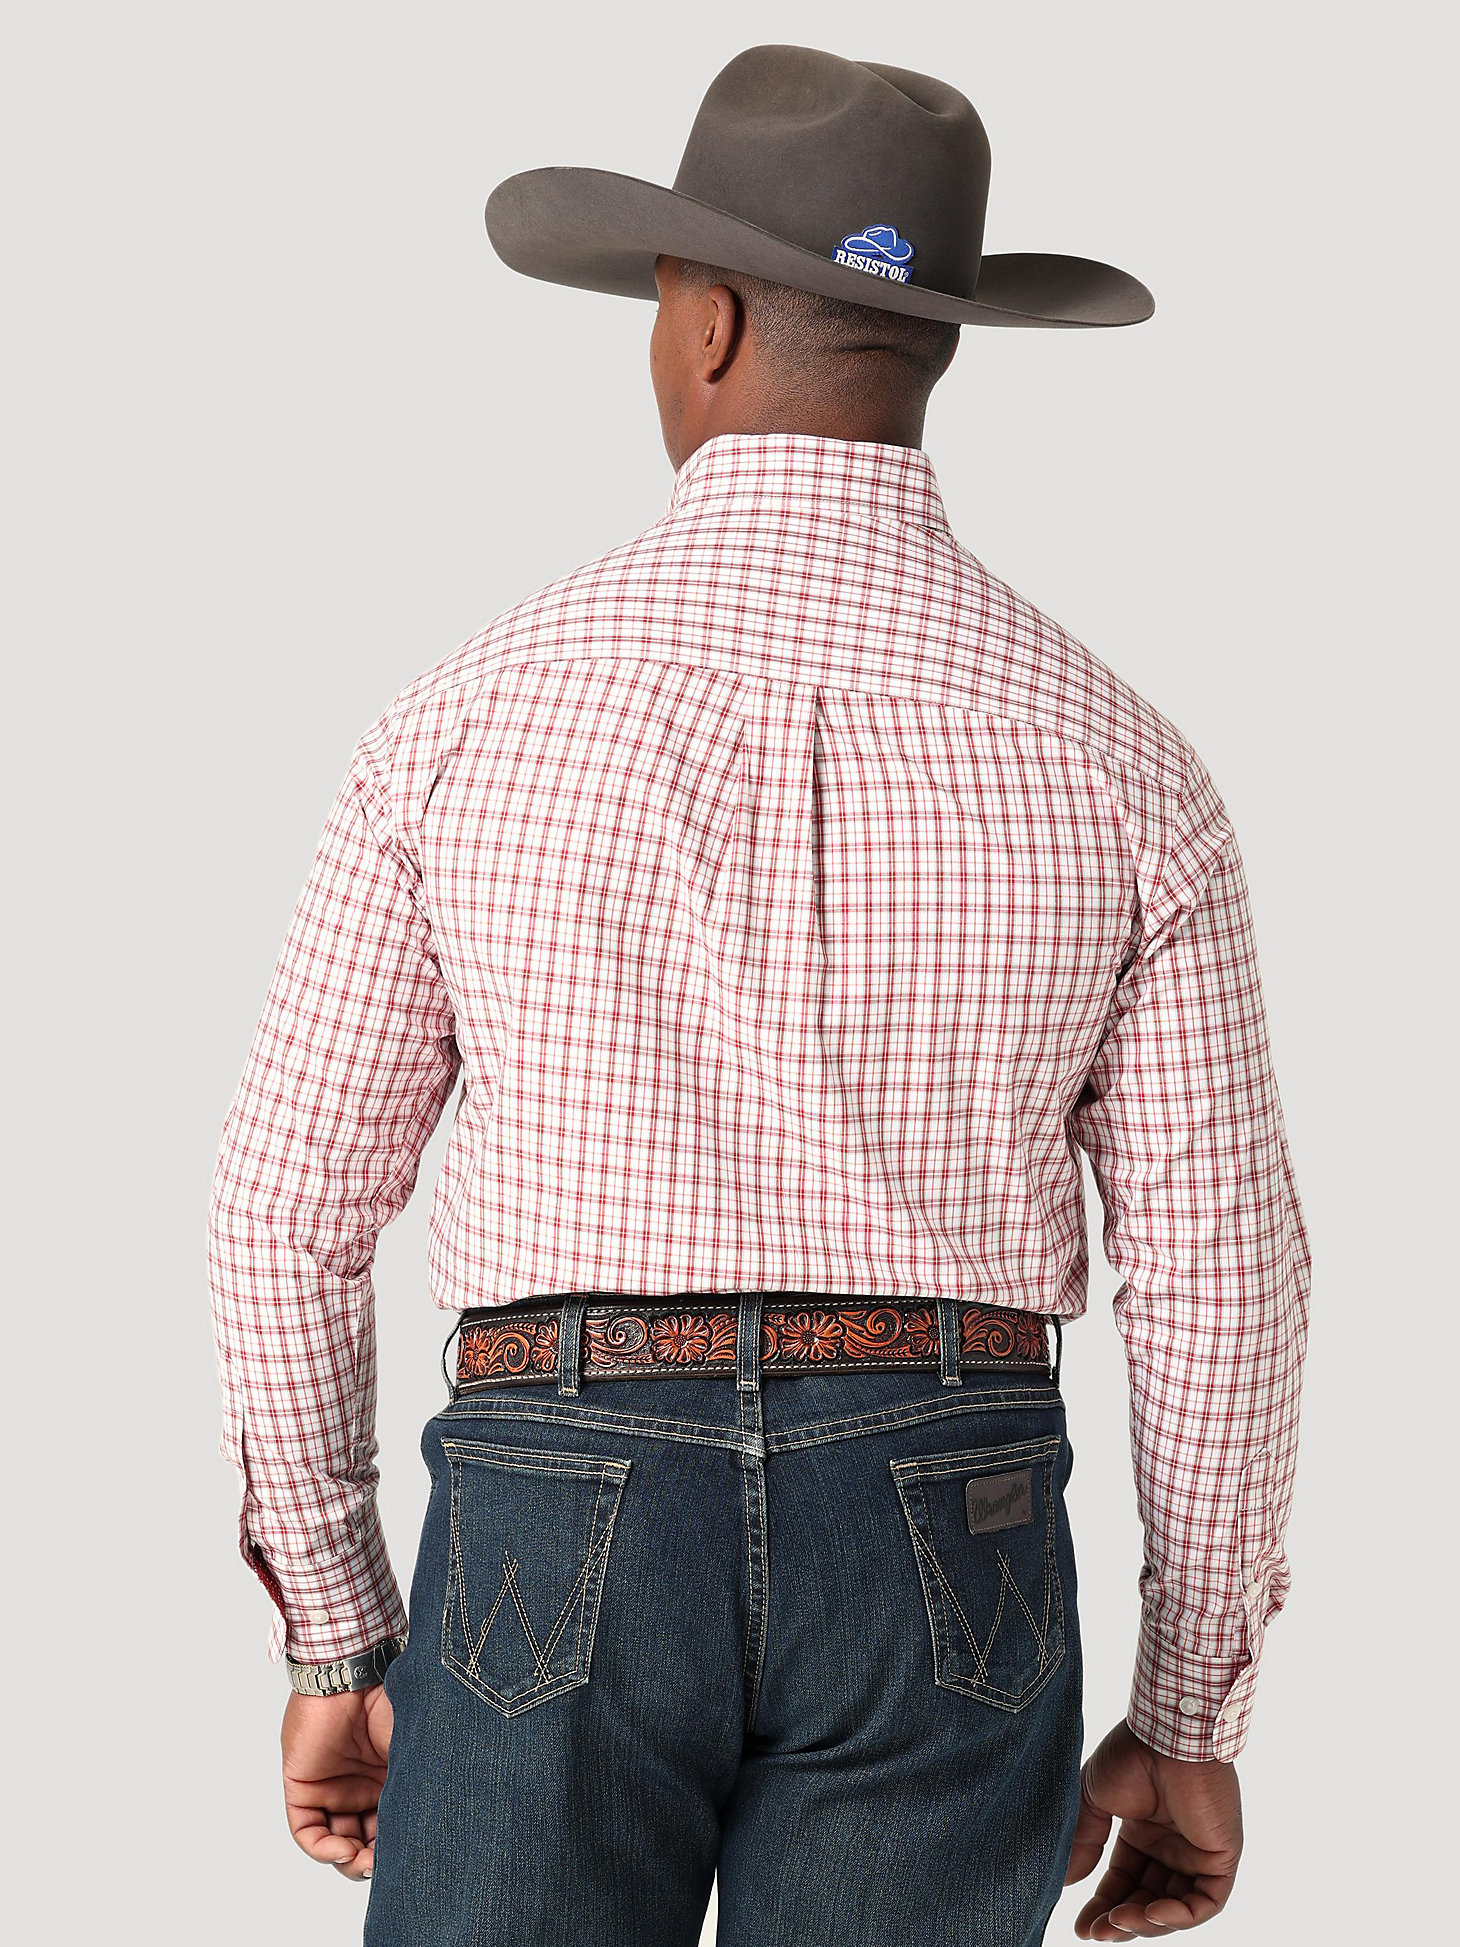 Men's George Strait Long Sleeve Button Down One Pocket Plaid Shirt in Brick Red Checks alternative view 1